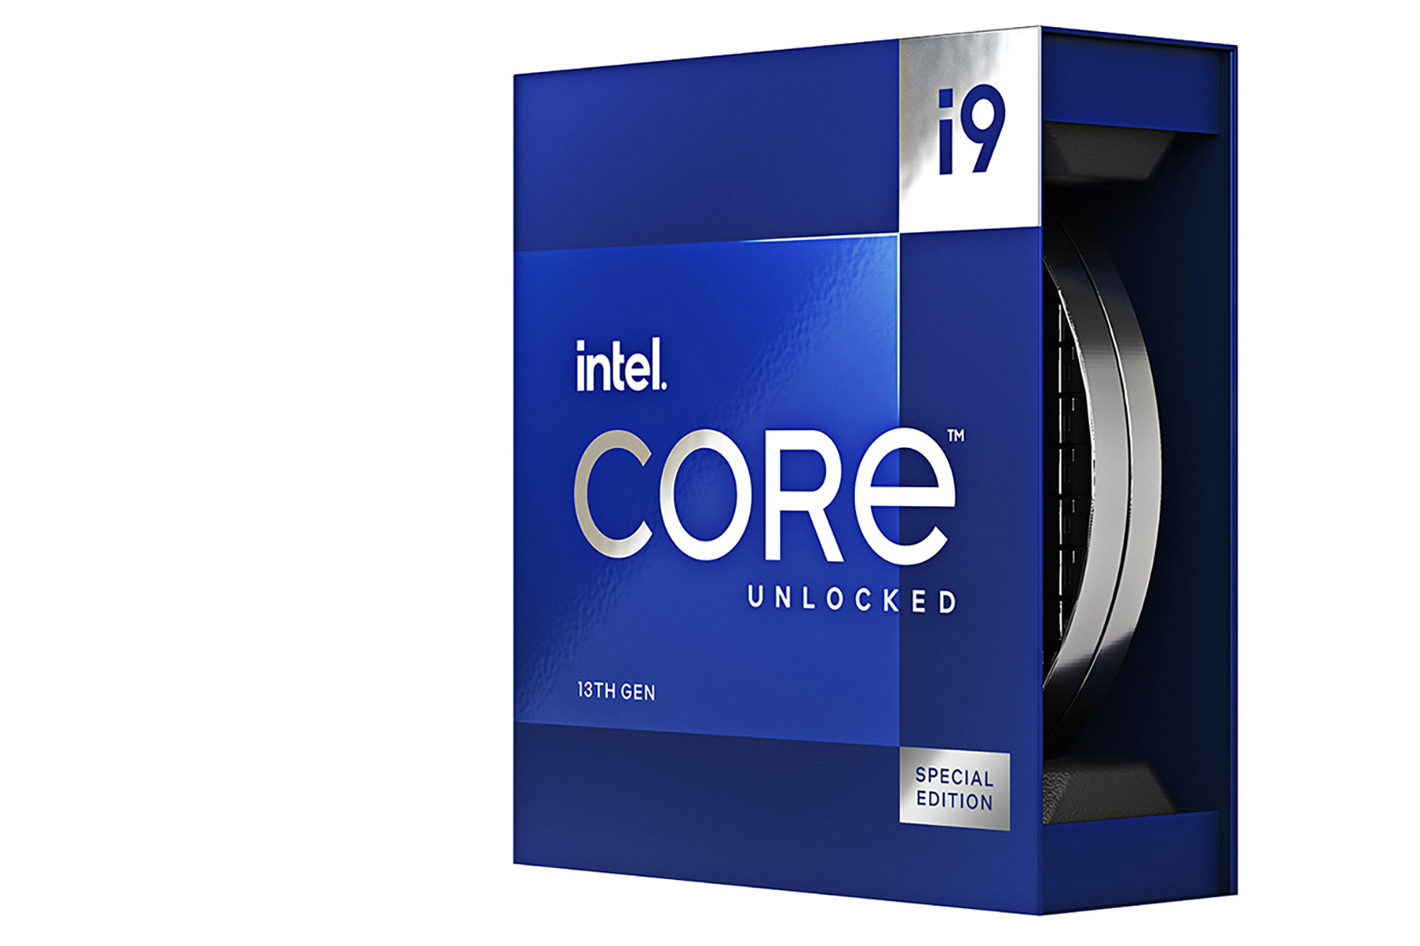 Intel Core i913900KS, the world’s fastest desktop processor by Jose